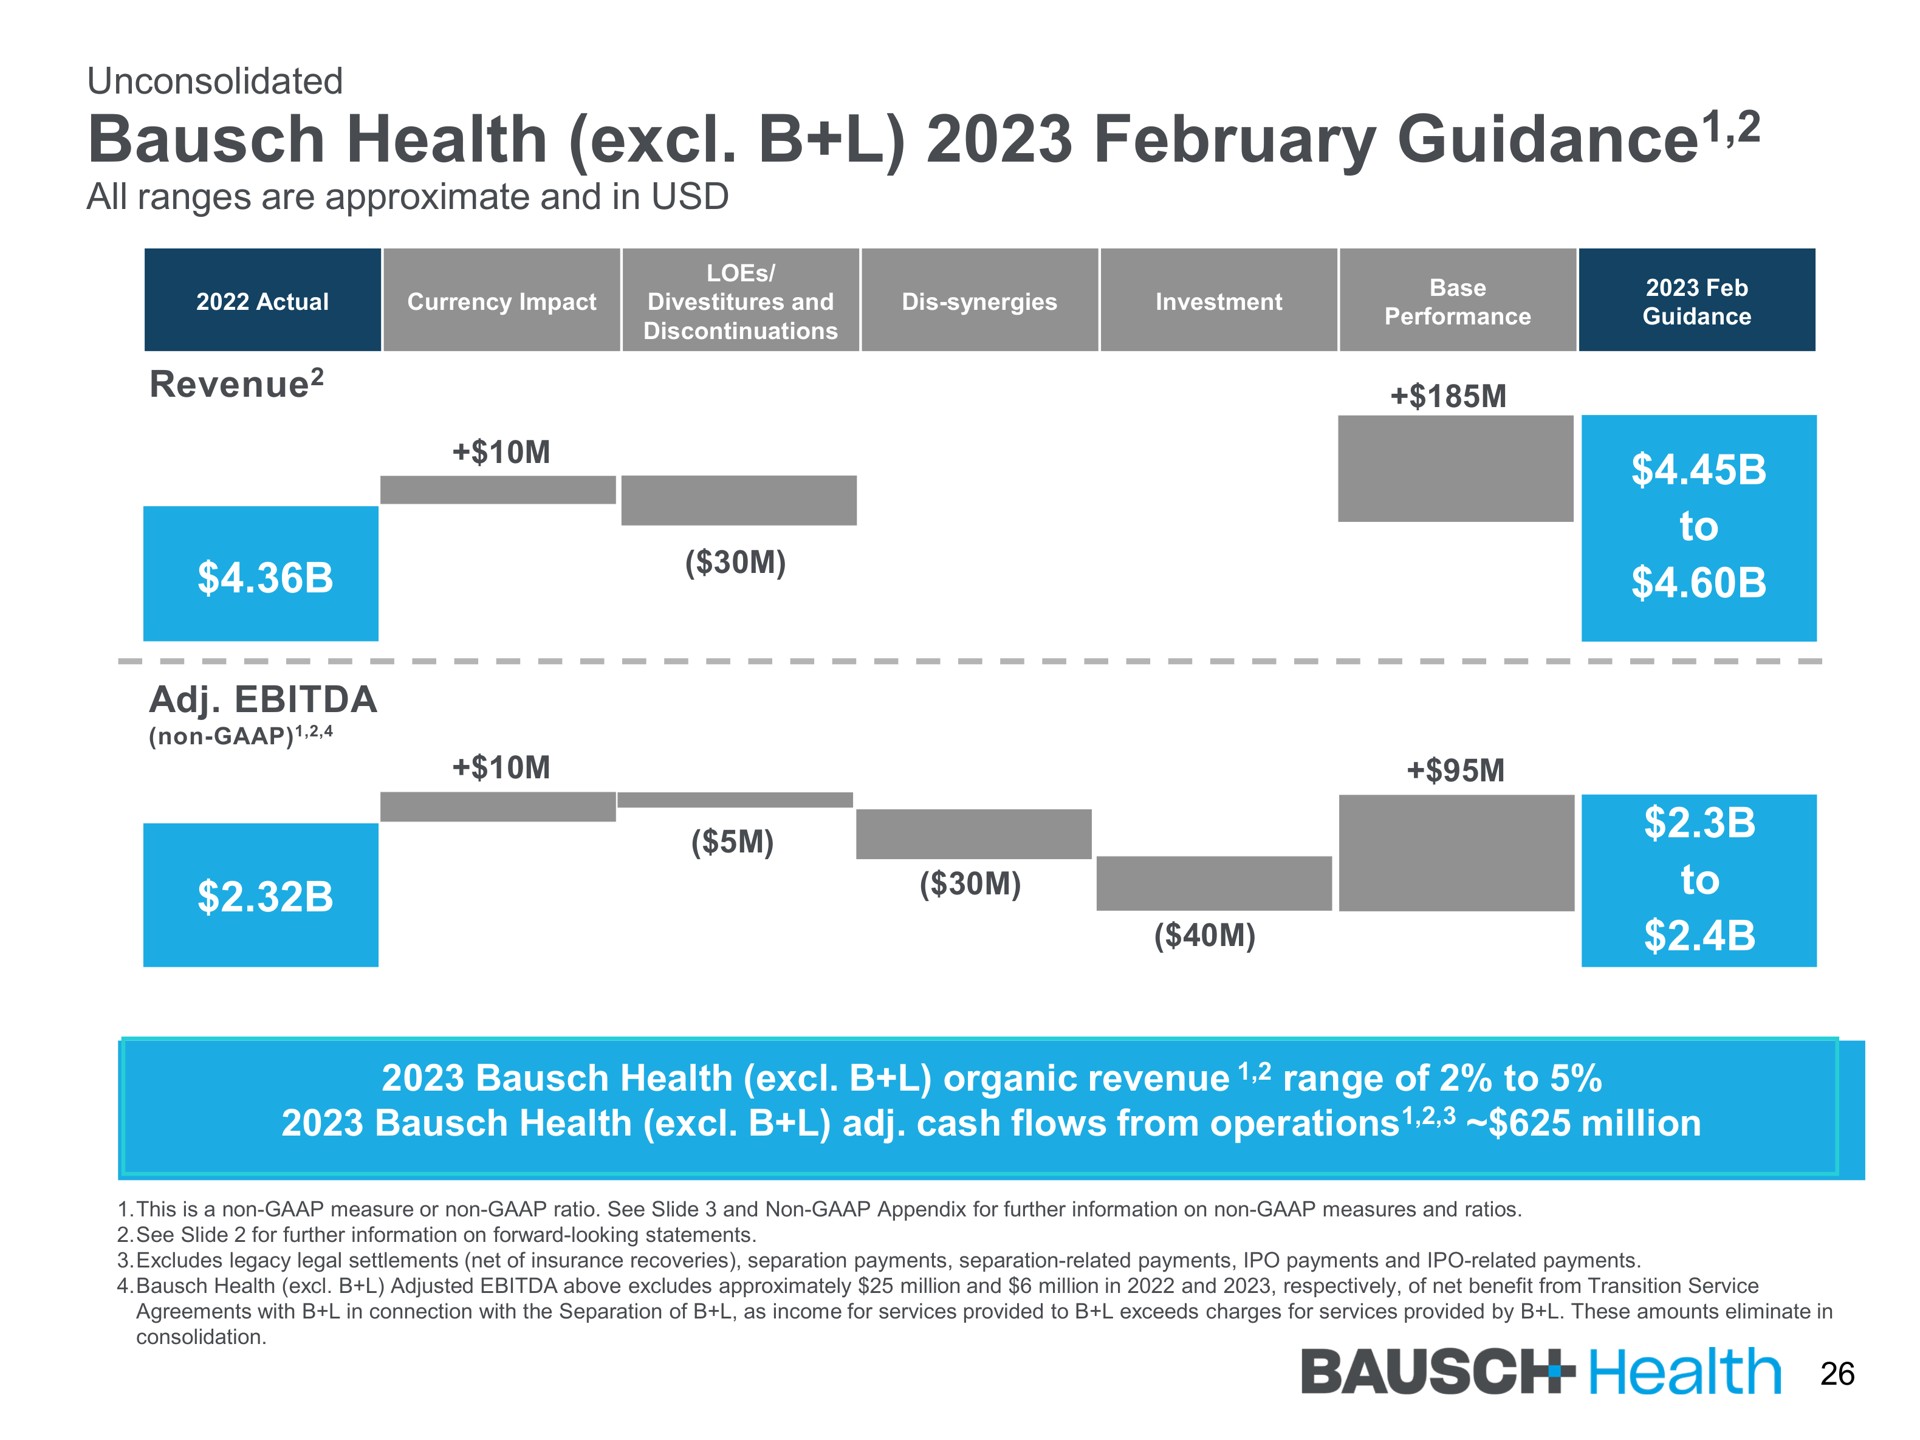 health guidance guidance i | Bausch Health Companies